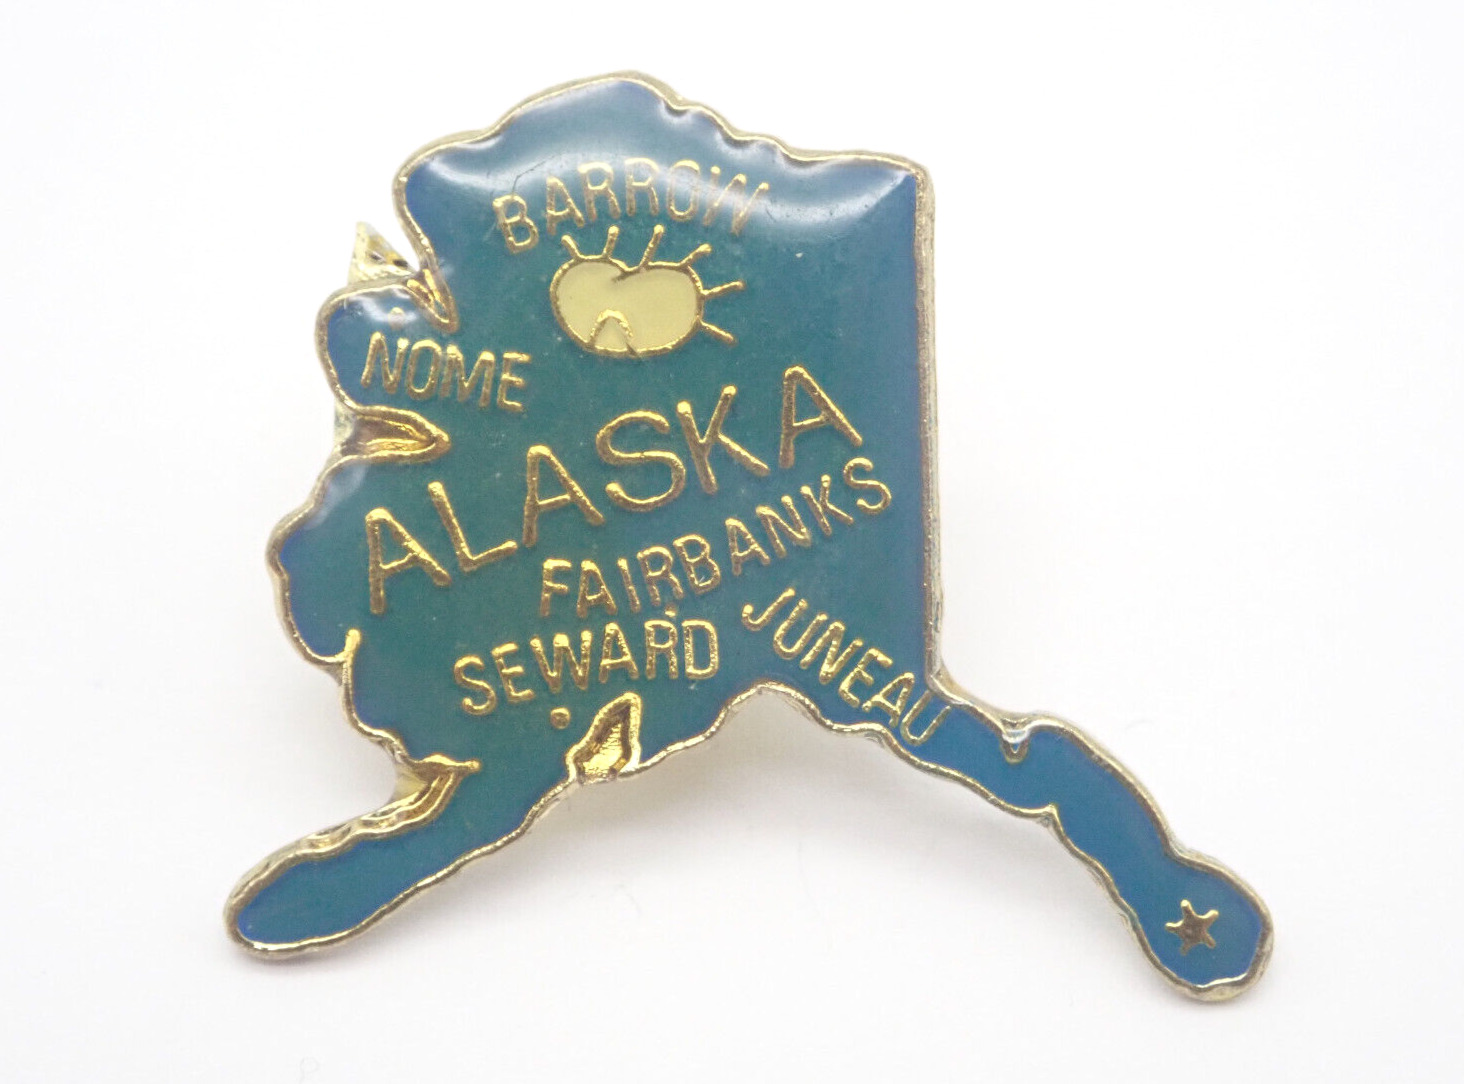 Alaska Nome Barrow Fairbanks Seward Juneau Vintage Lapel Pin